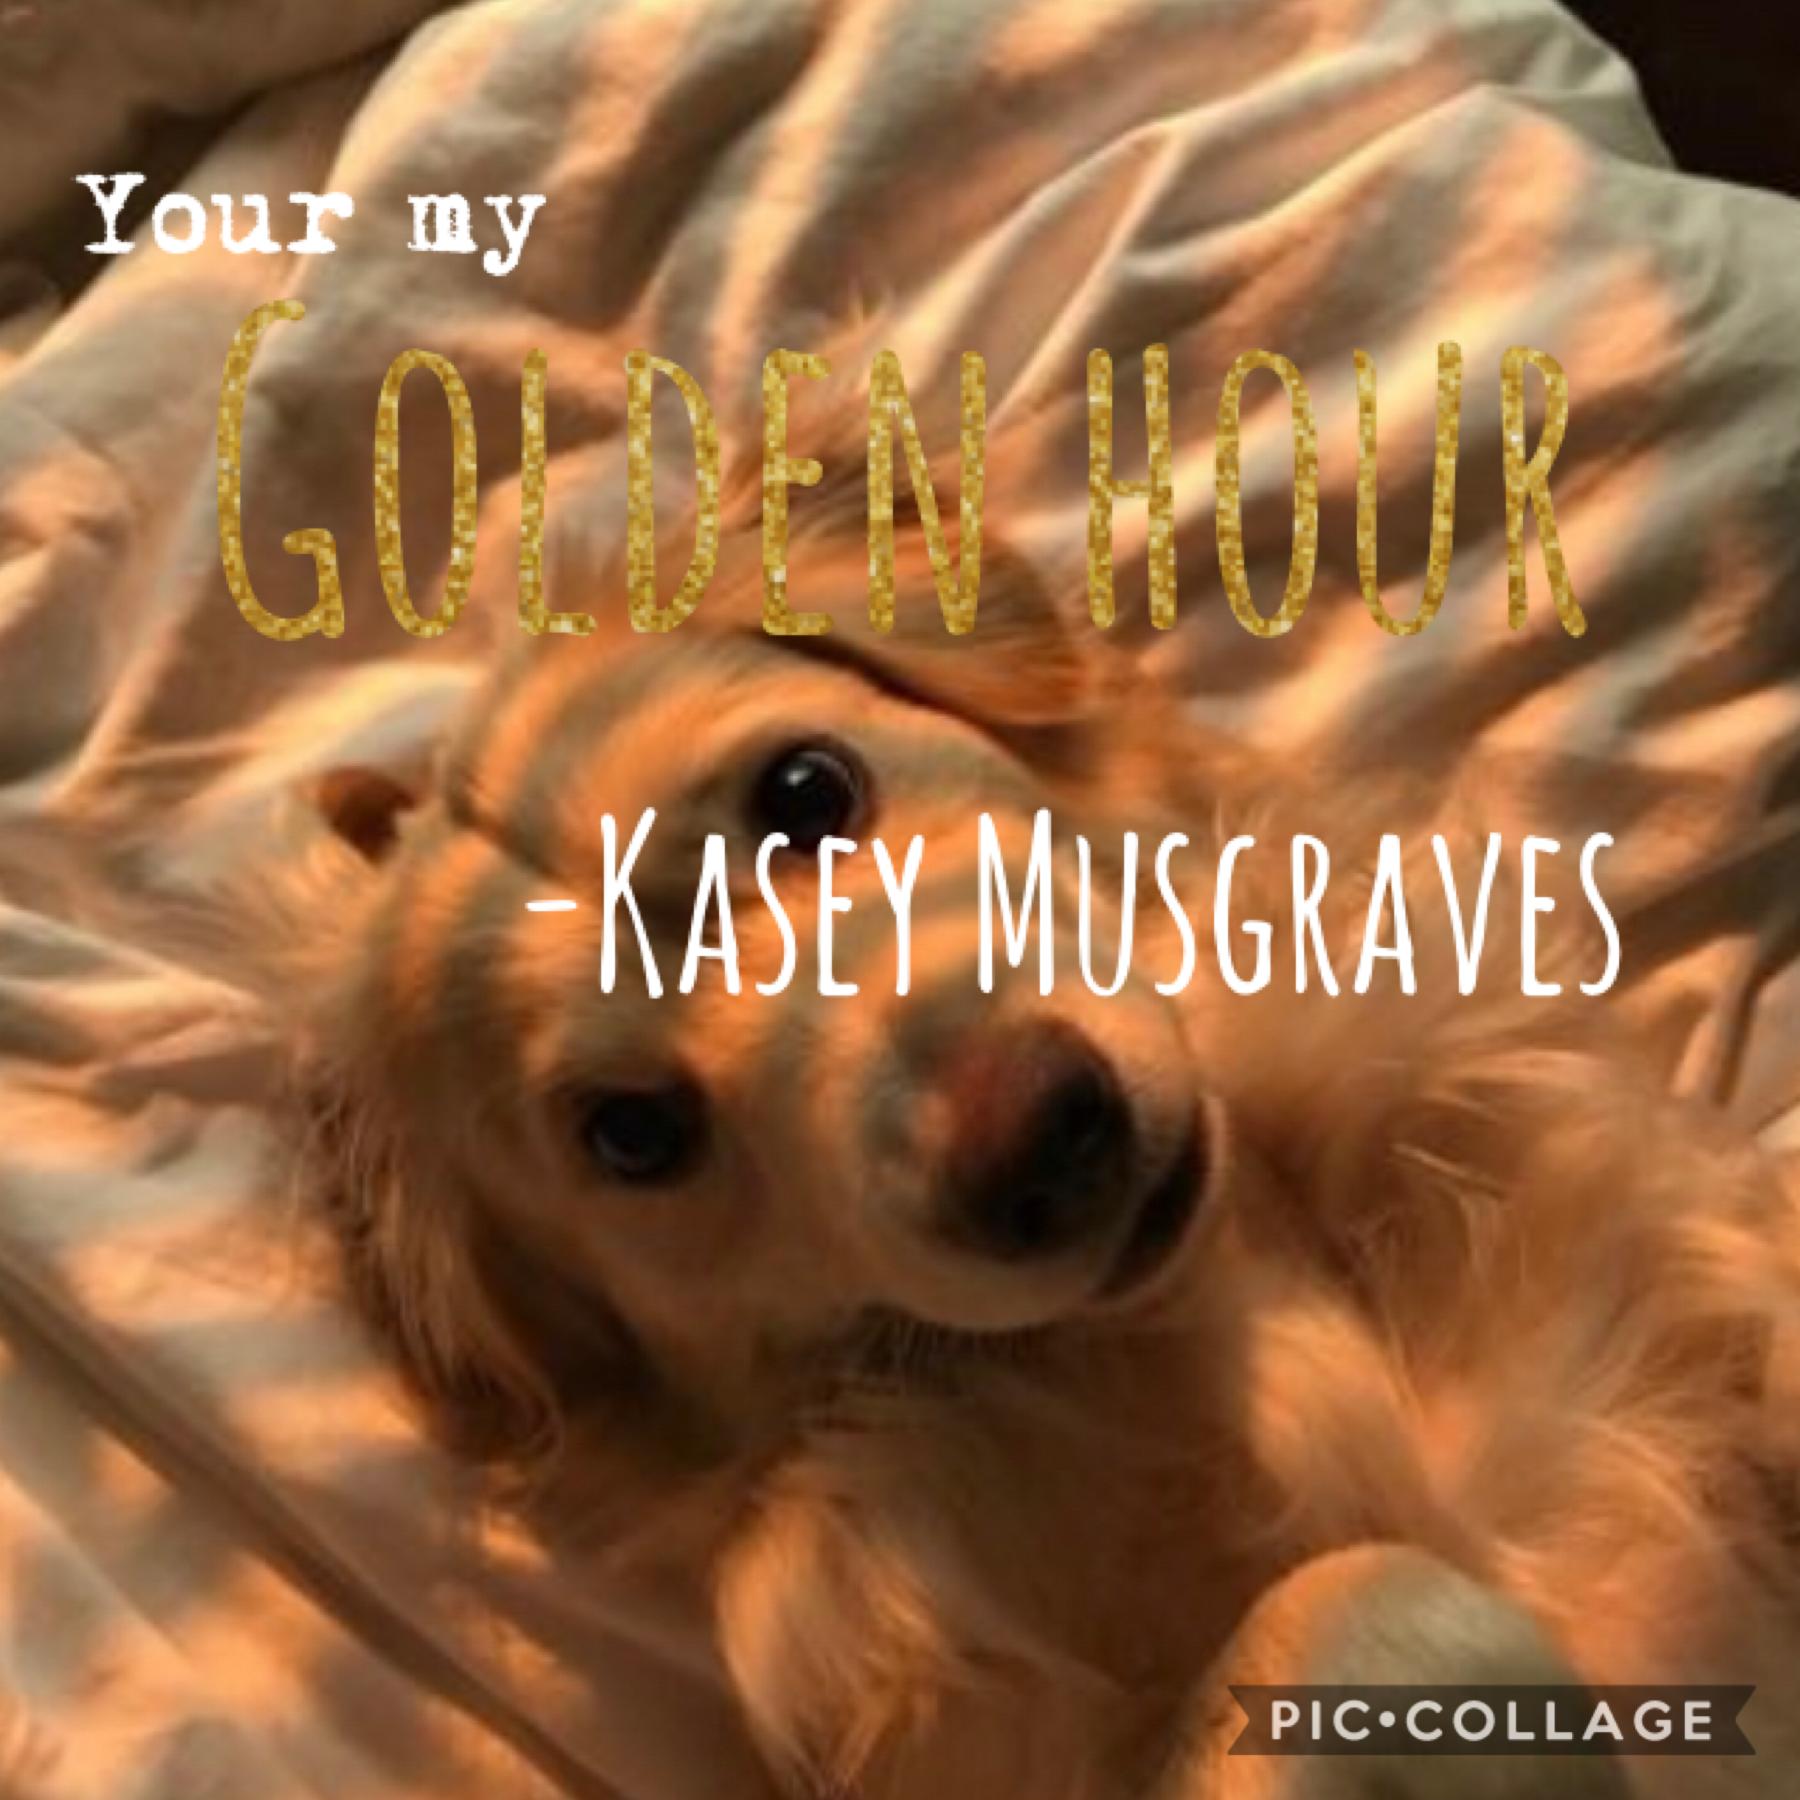 Golden Hour: Kasey Musgraves